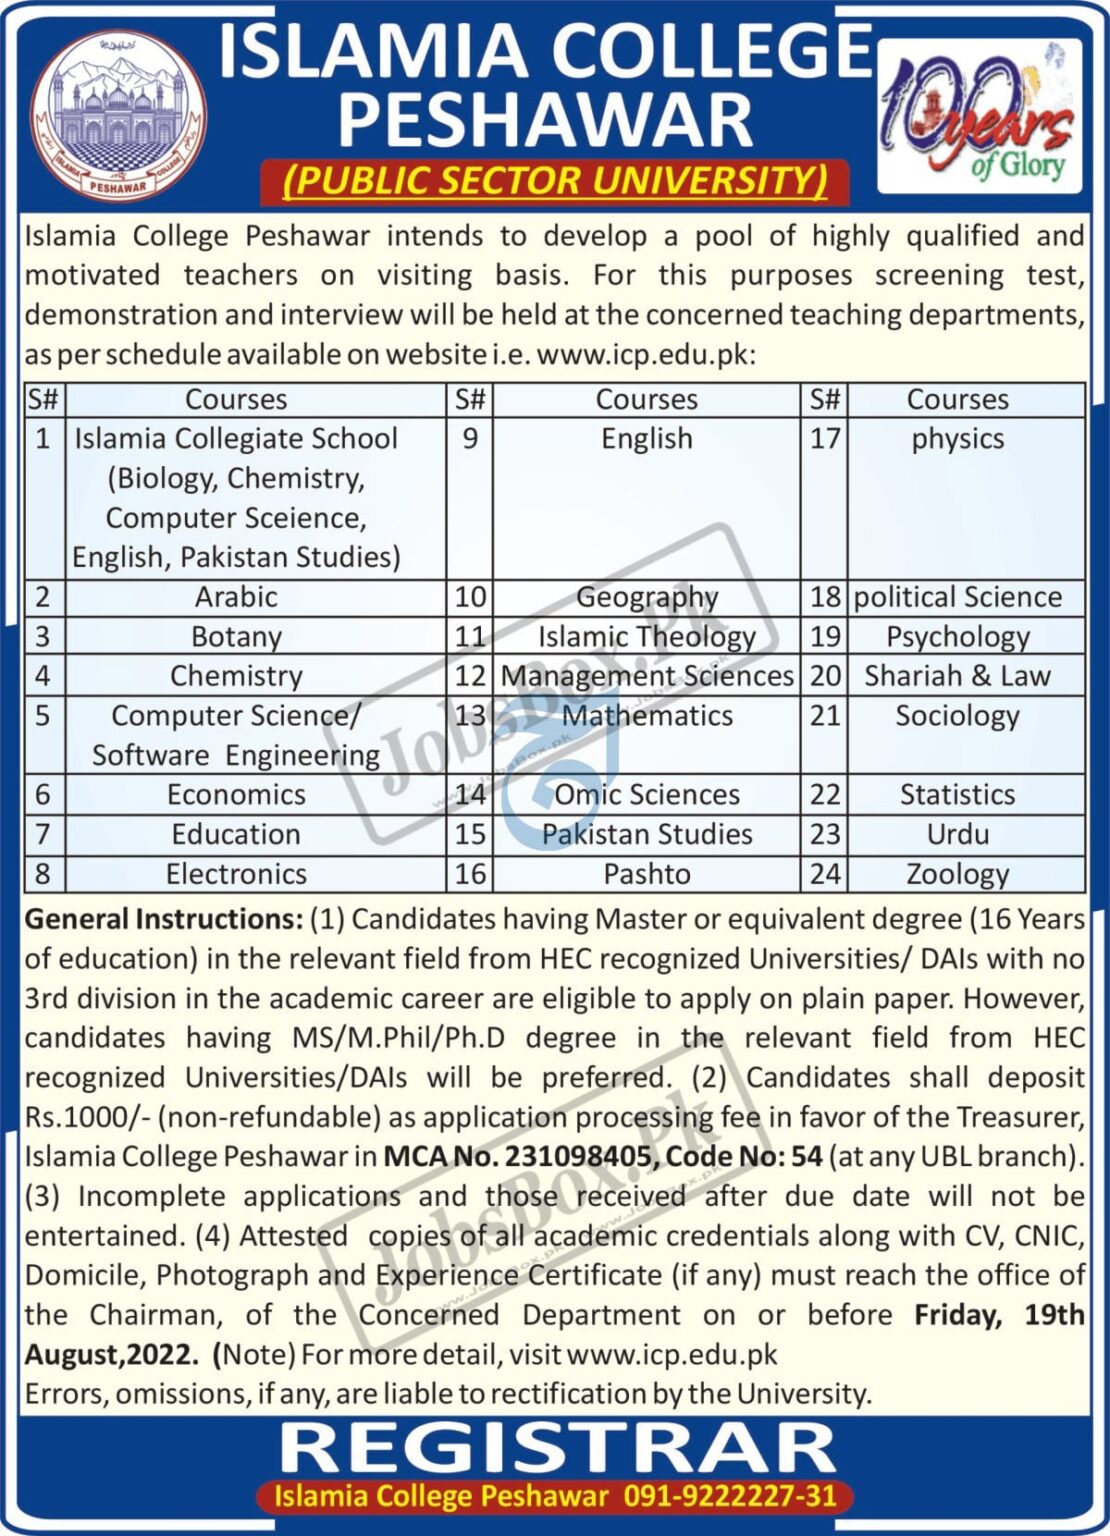 Islamic College Peshawar Jobs 2022